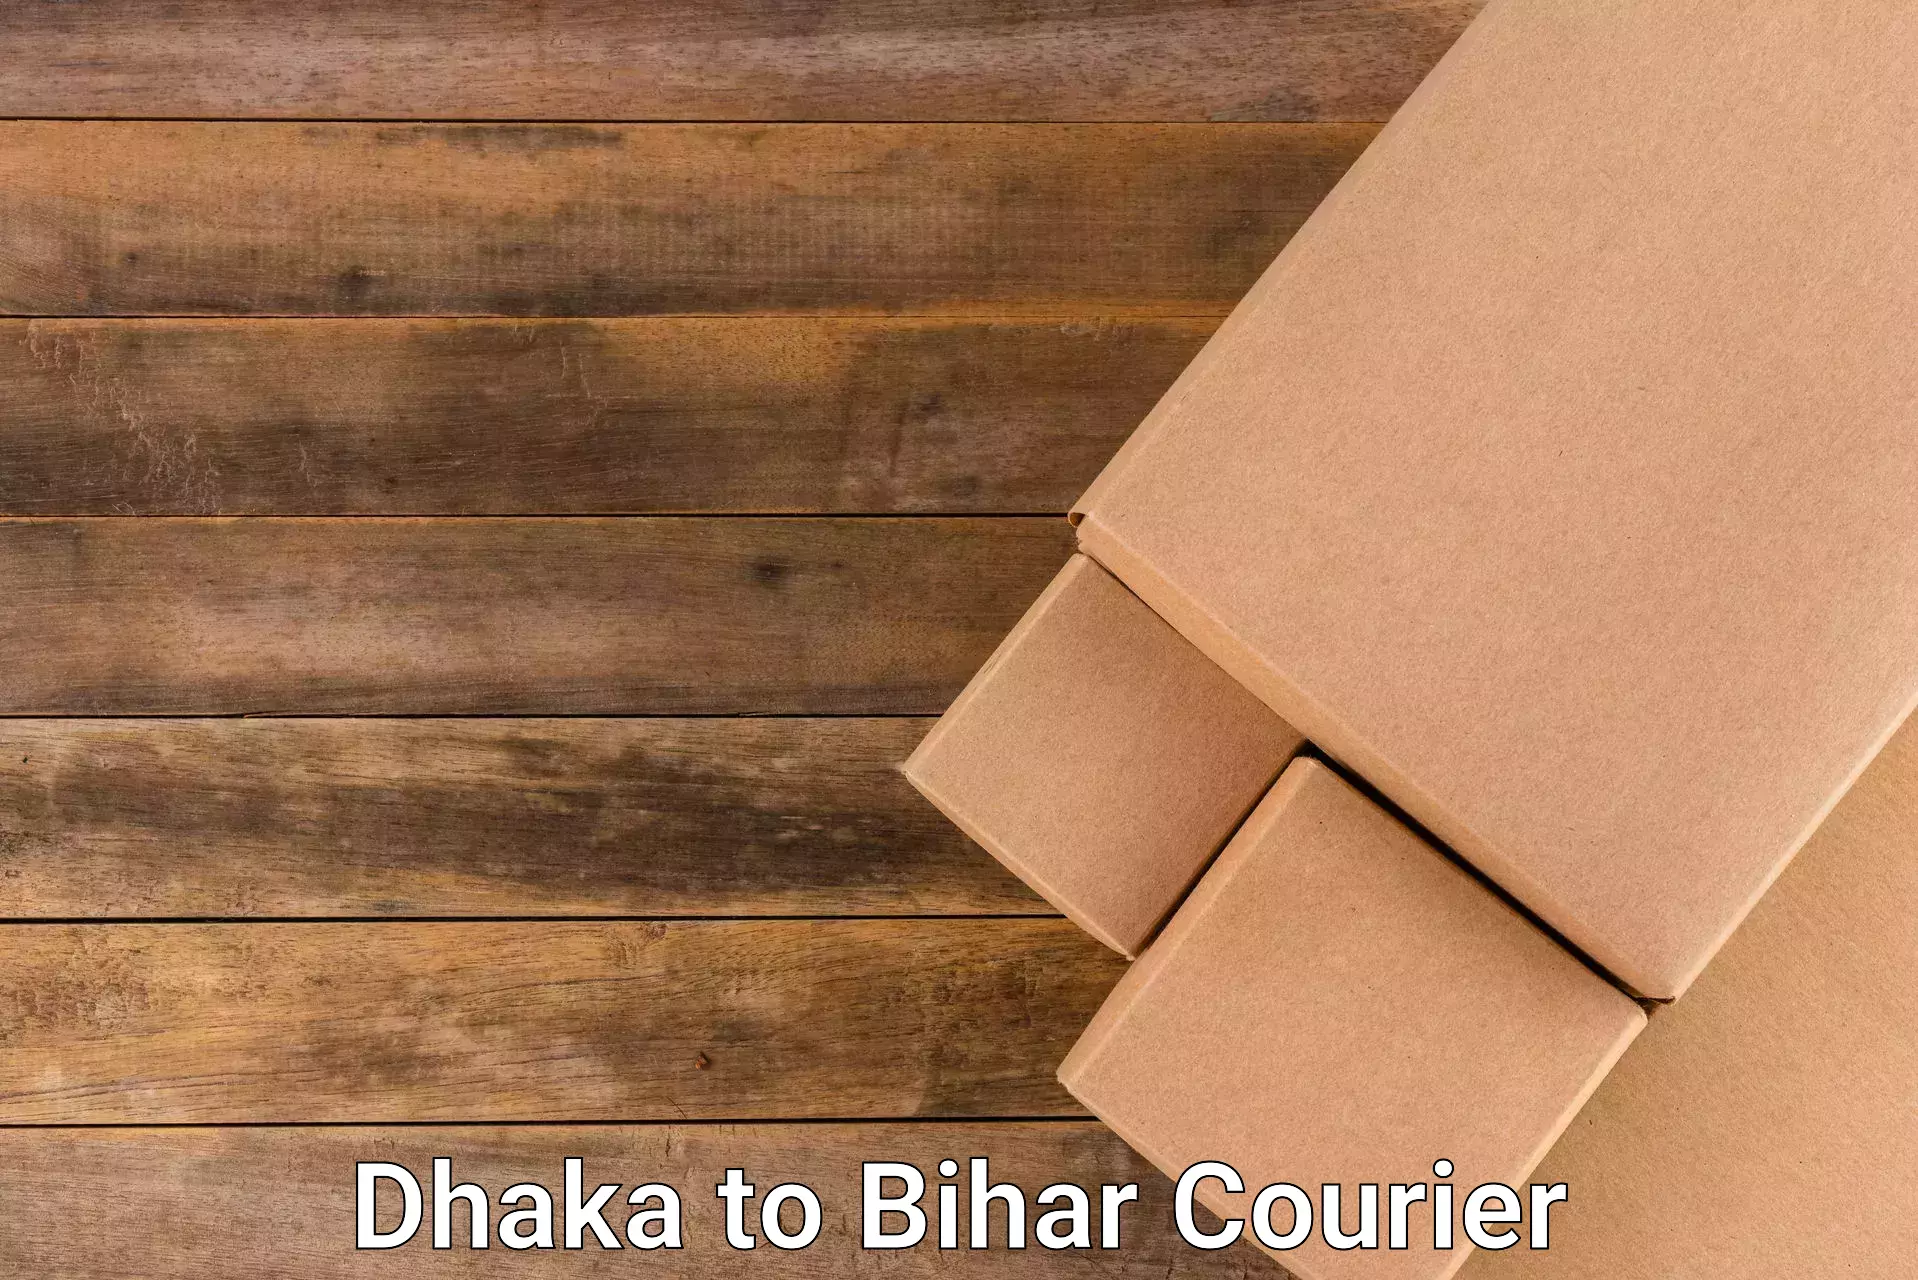 Courier service comparison Dhaka to Aurangabad Bihar